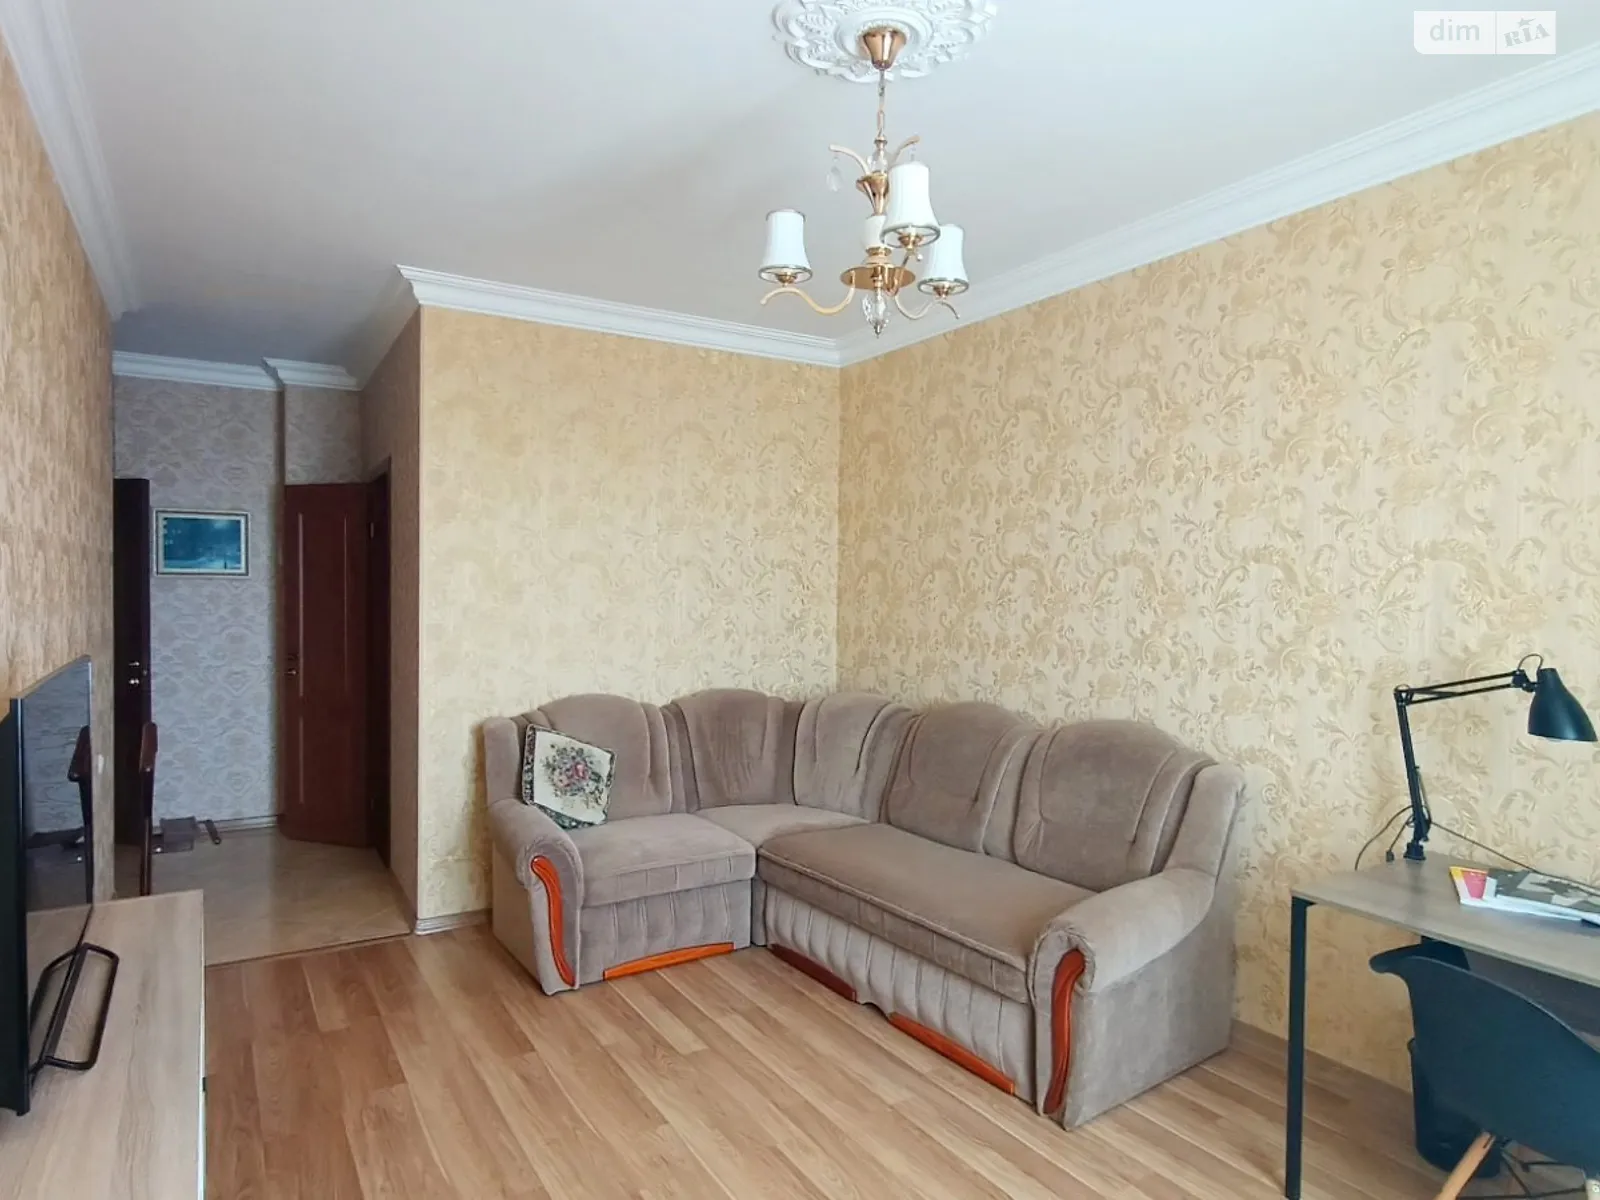 Сдается в аренду 2-комнатная квартира 68 кв. м в Одессе, ул. Шота Руставели - фото 1